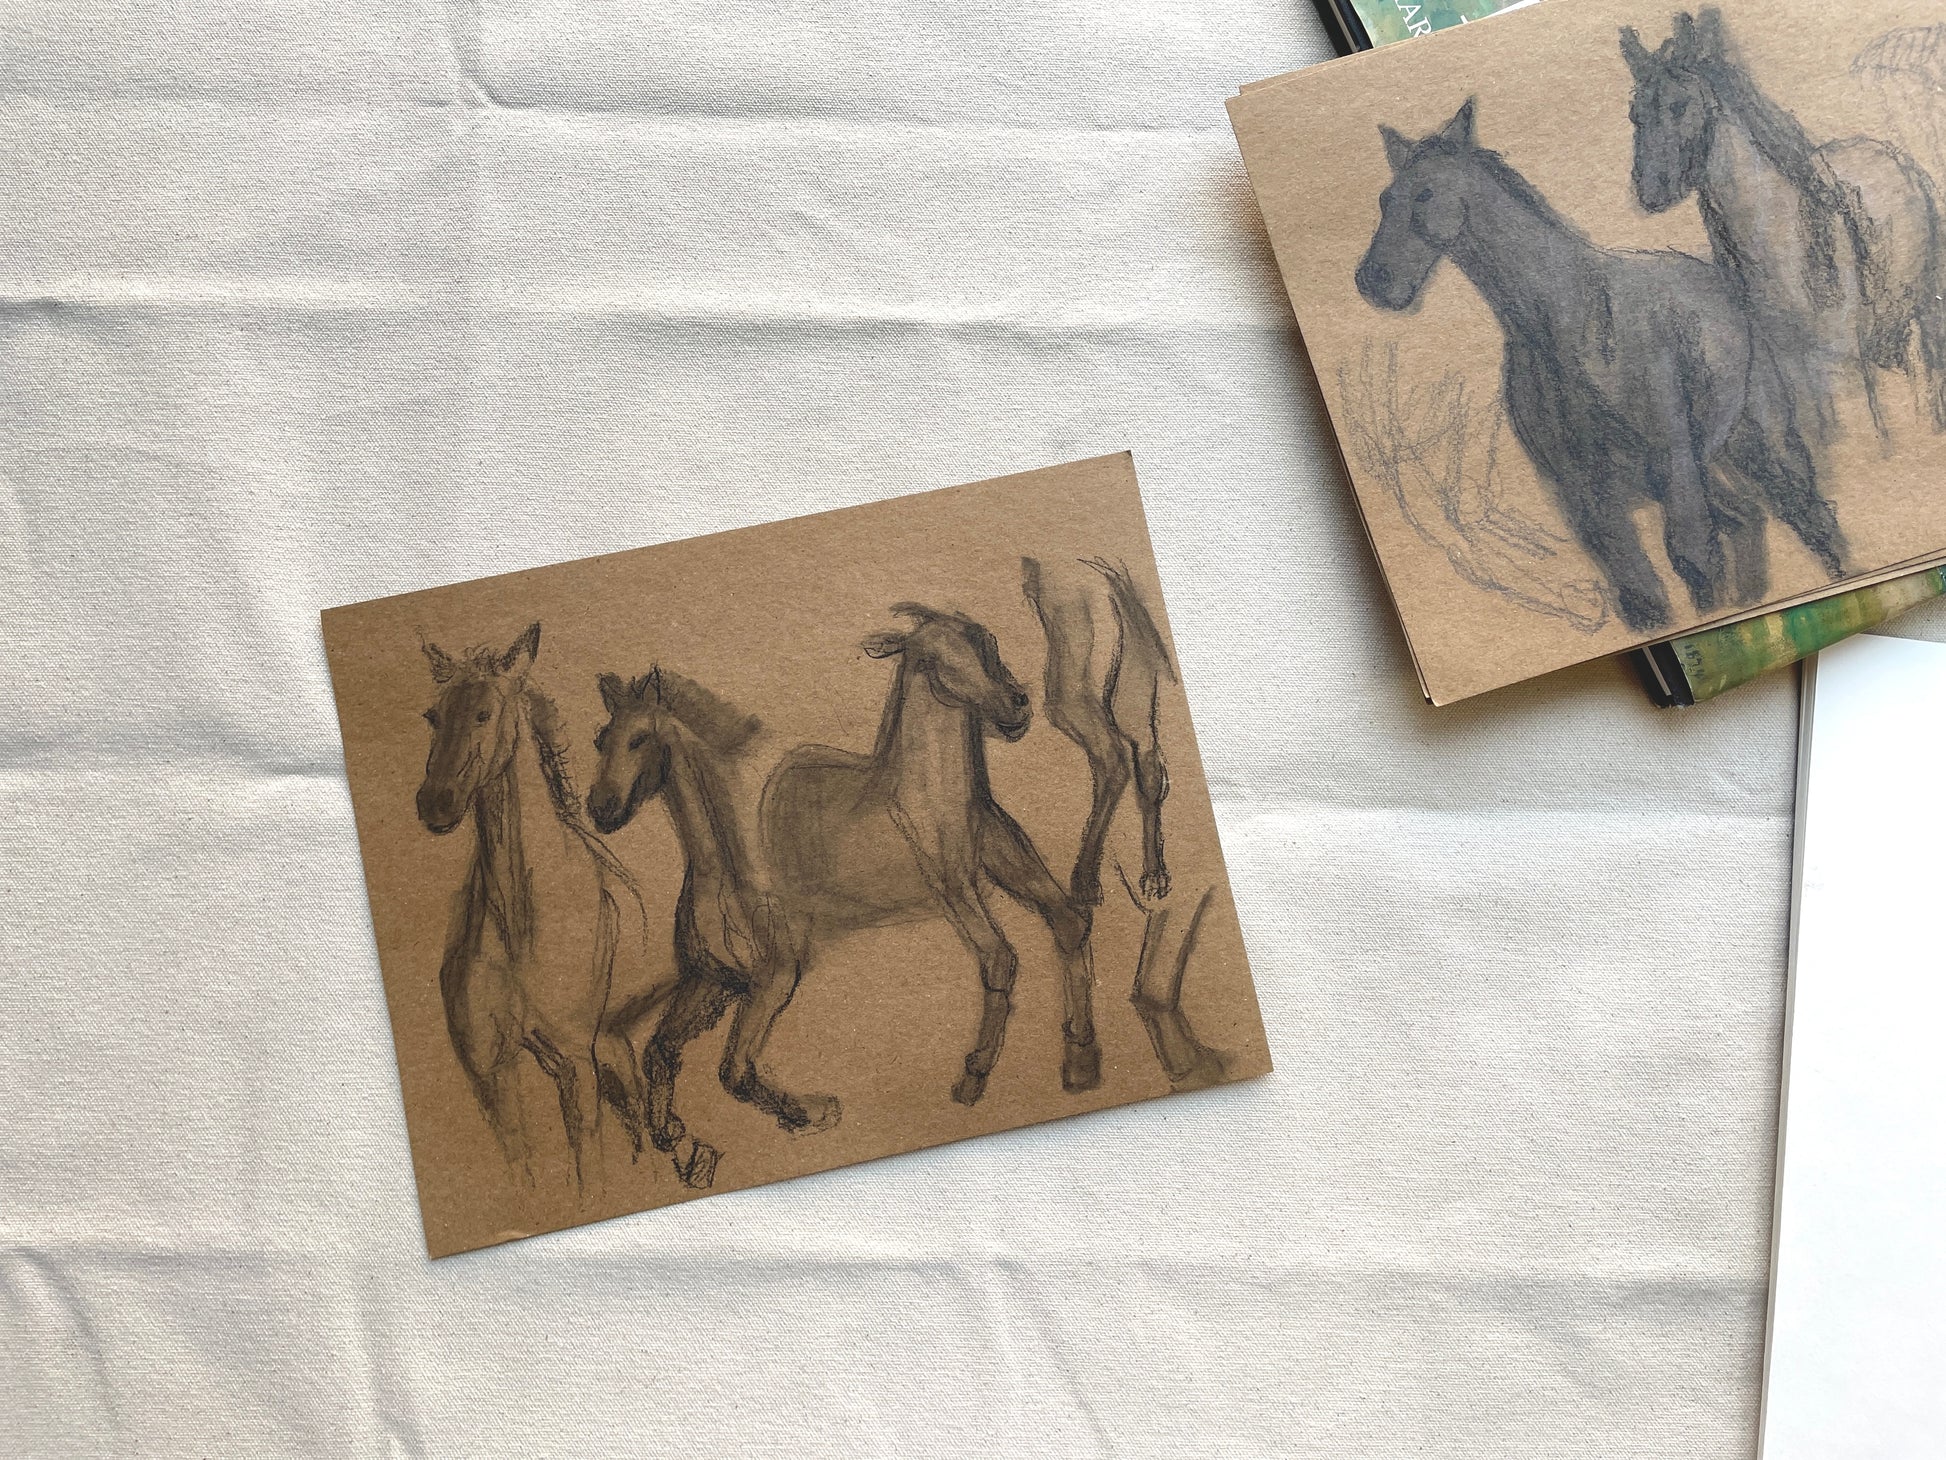 Equestrian artwork in monochrome on rough paper